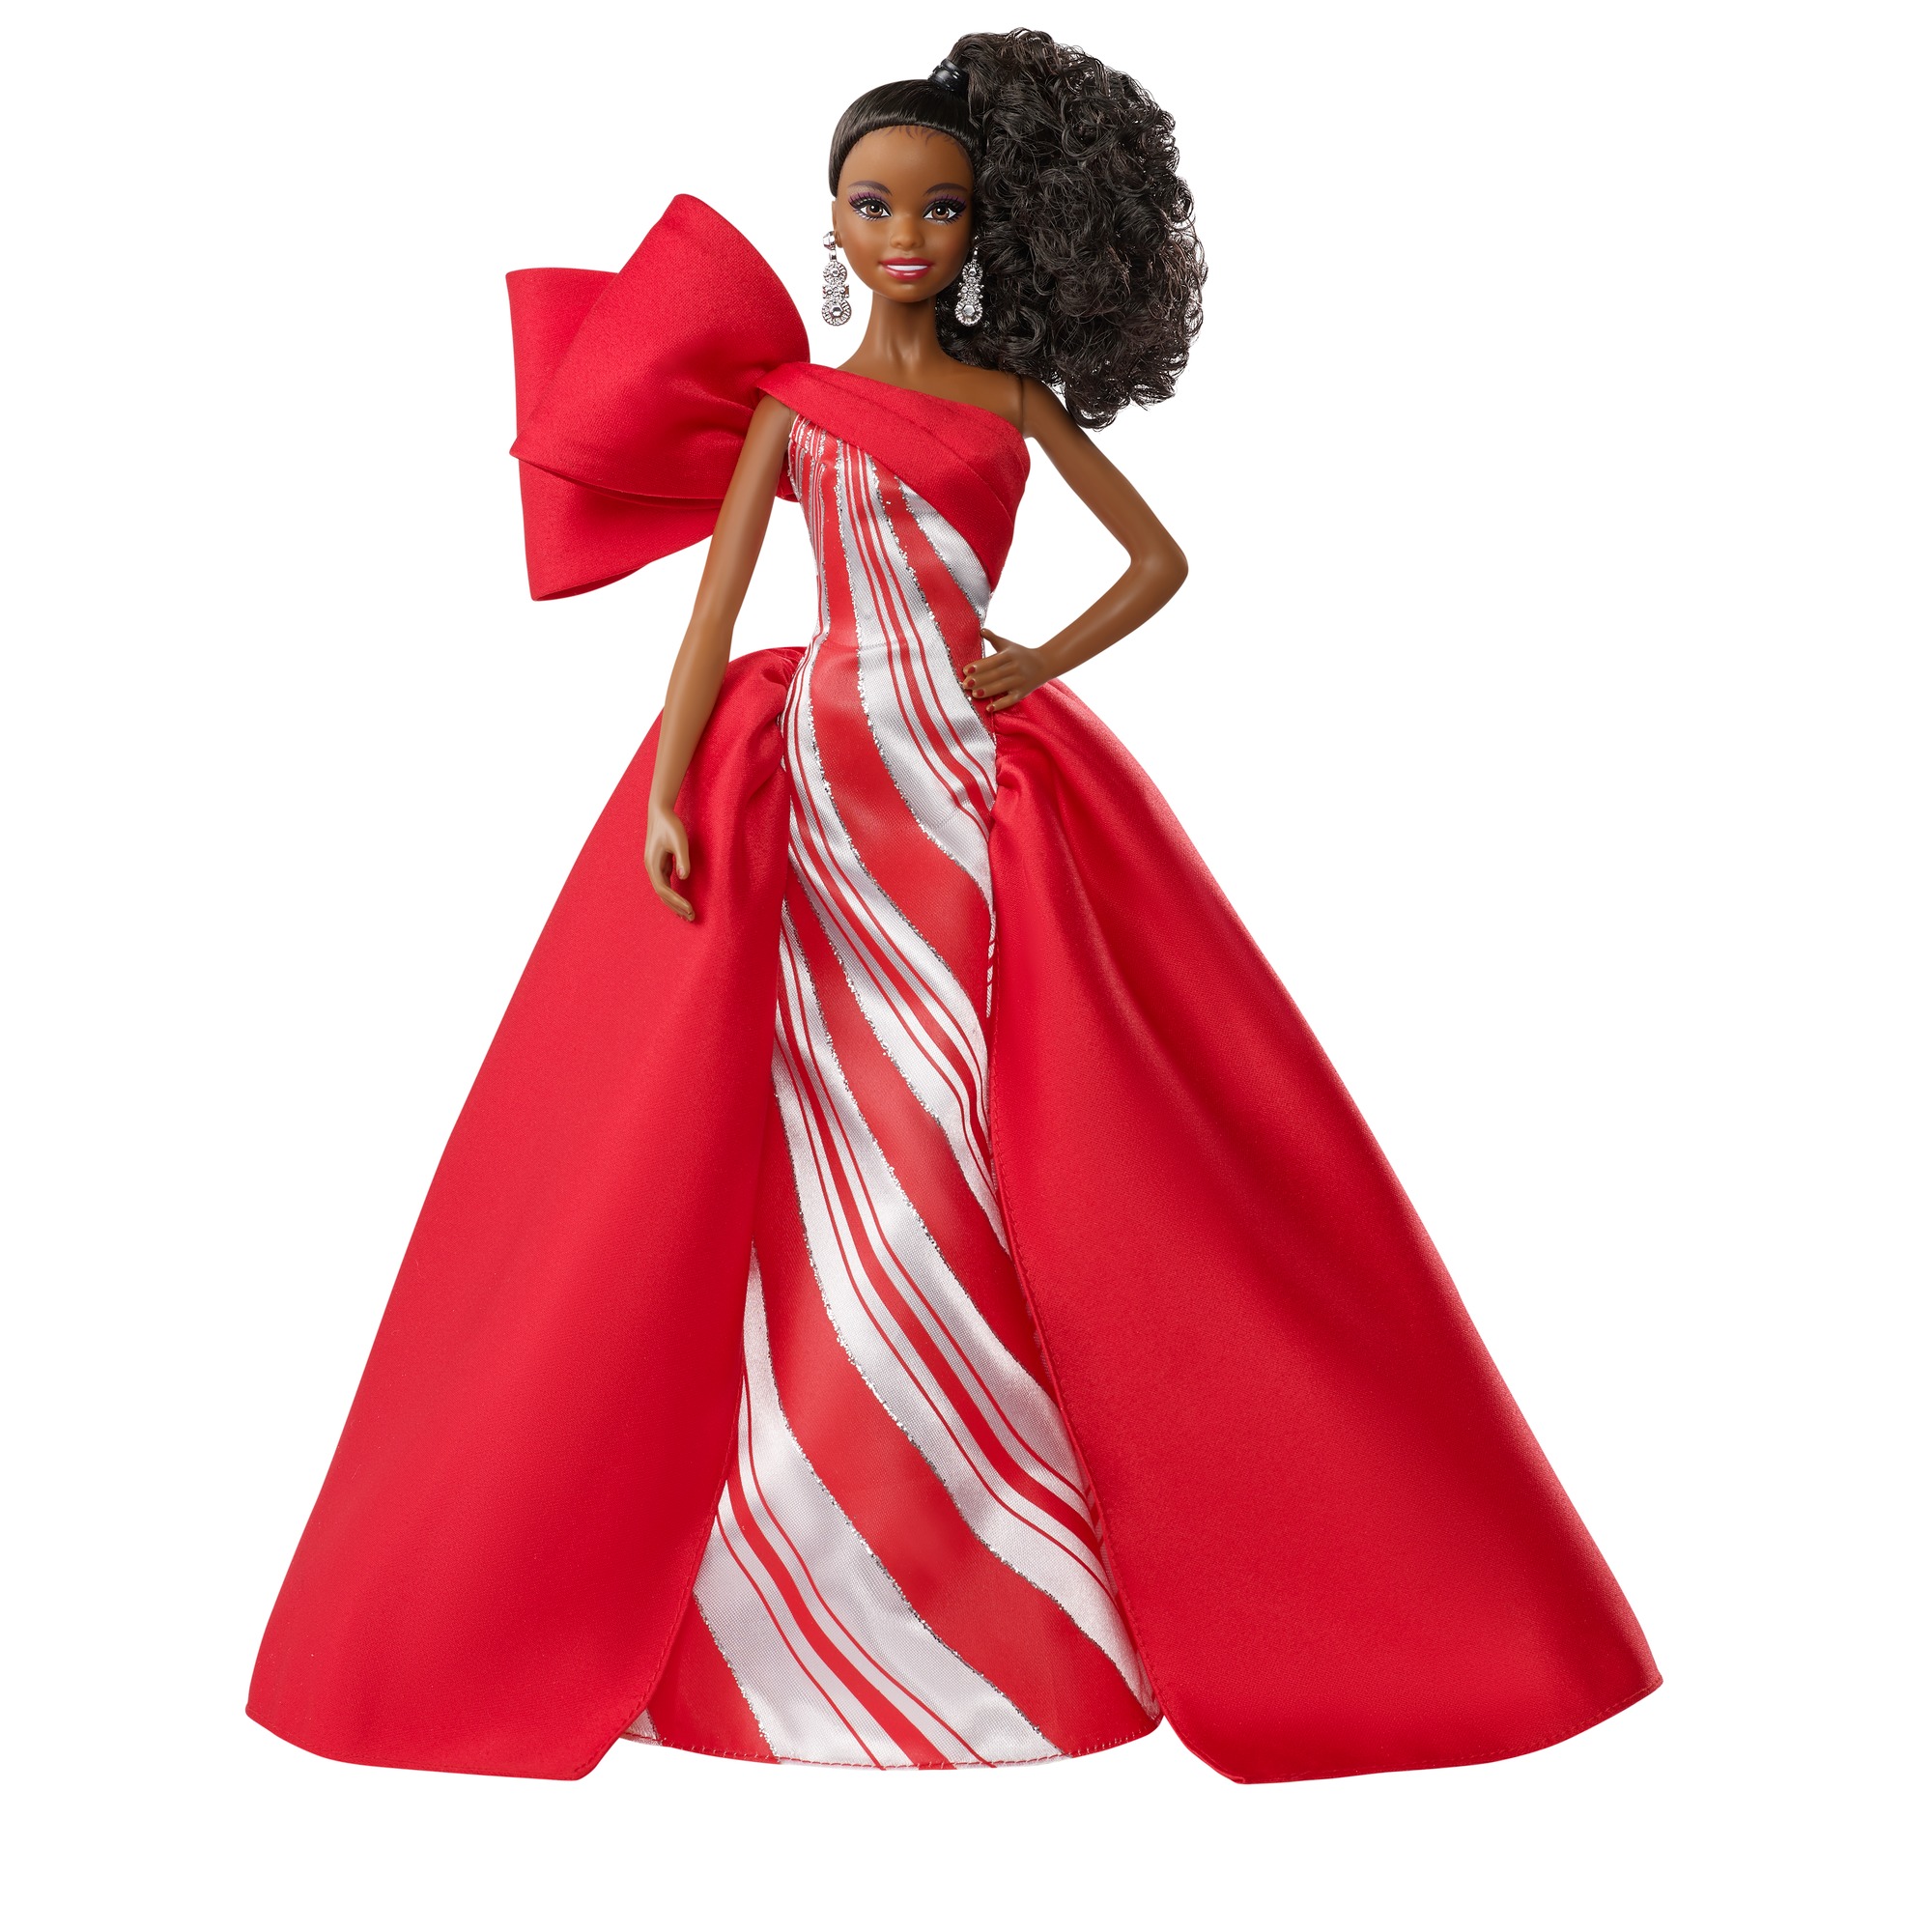 Mattel Holiday Treasures Barbie 